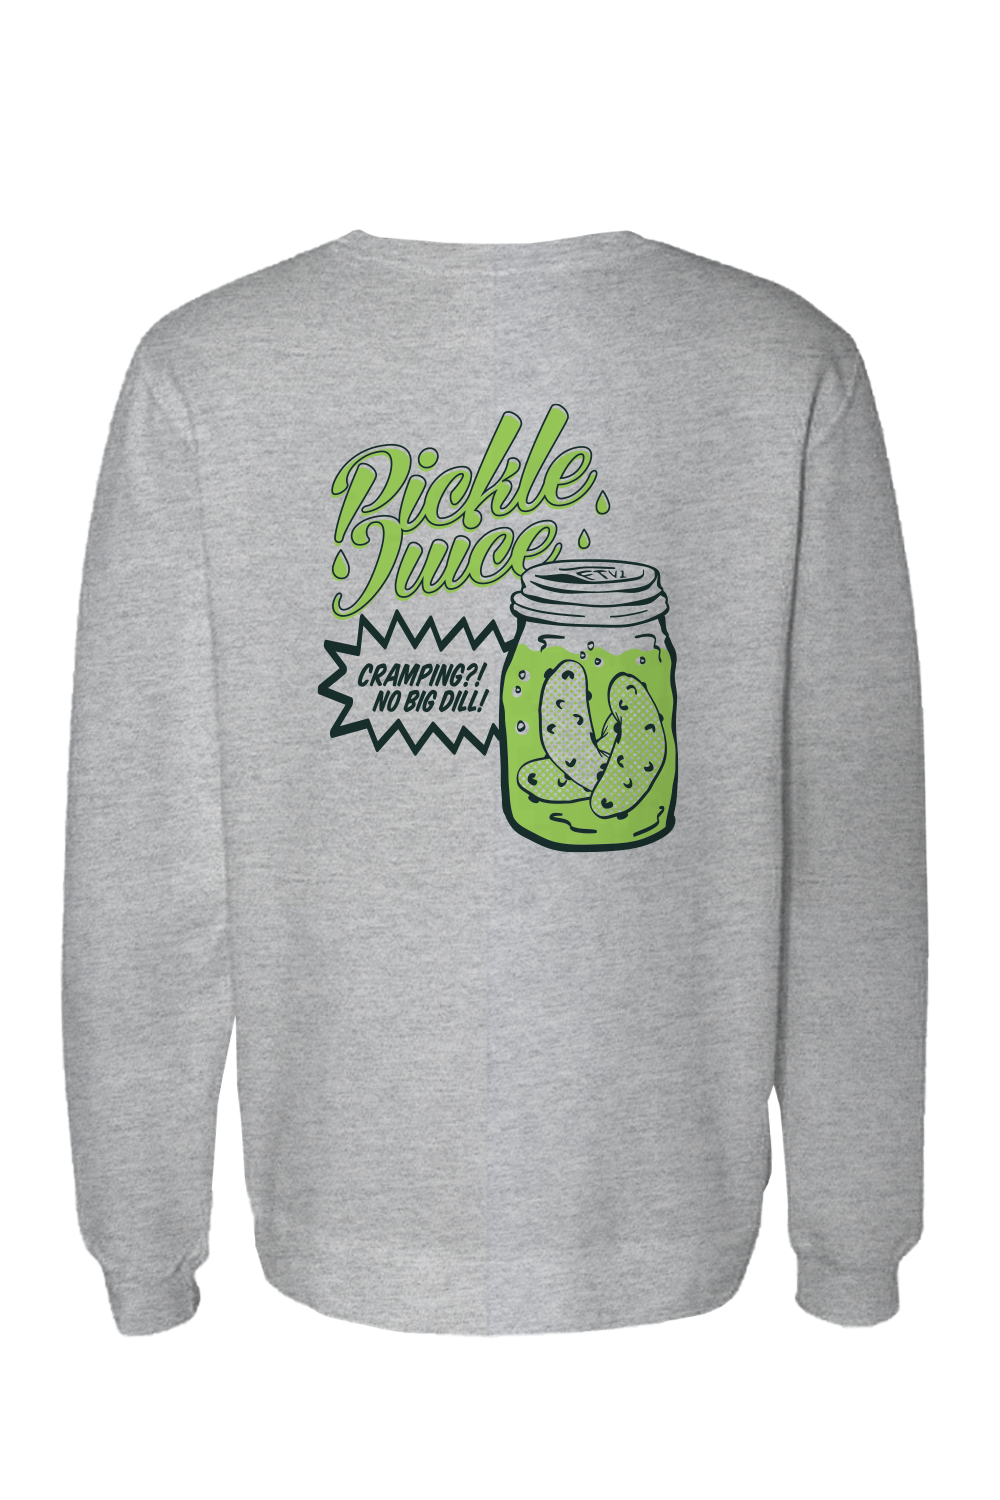 Pickle Juice Crewneck Sweatshirt (Heather Grey)